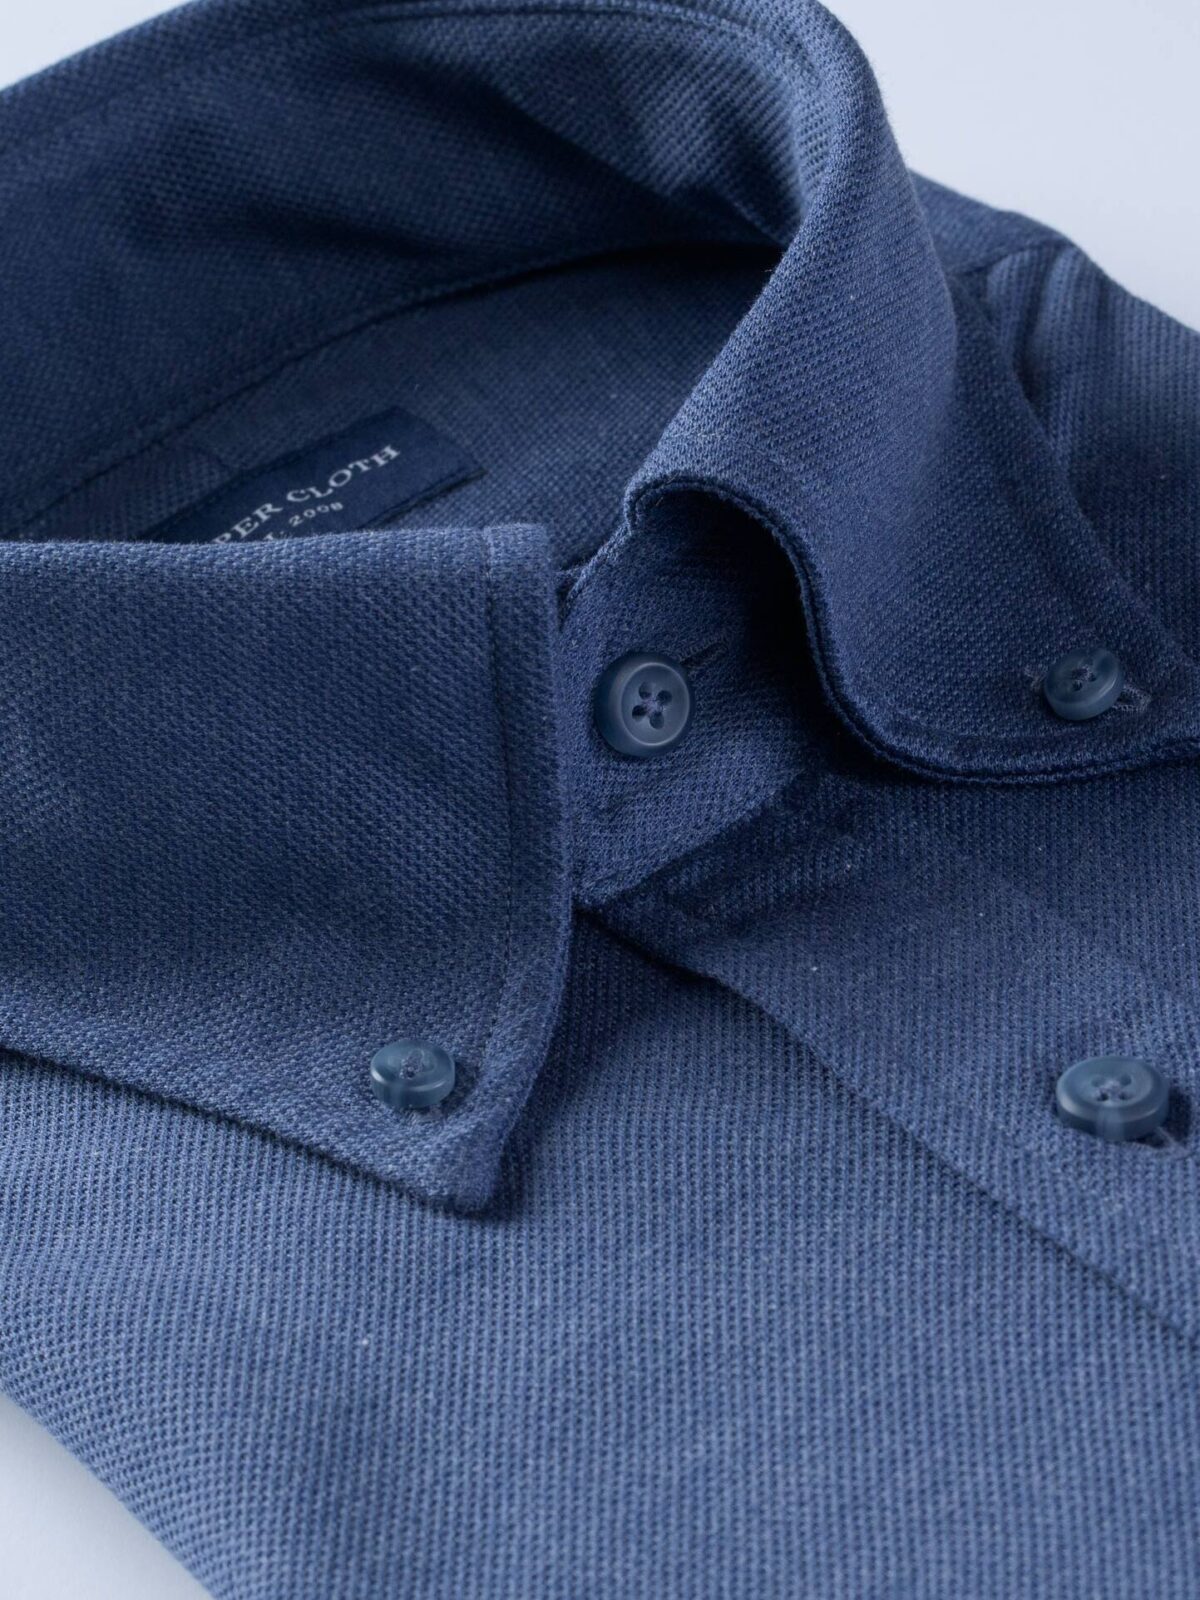 Monterey Light Blue Cotton and Linen Blend Knit Pique Shirt by Proper Cloth